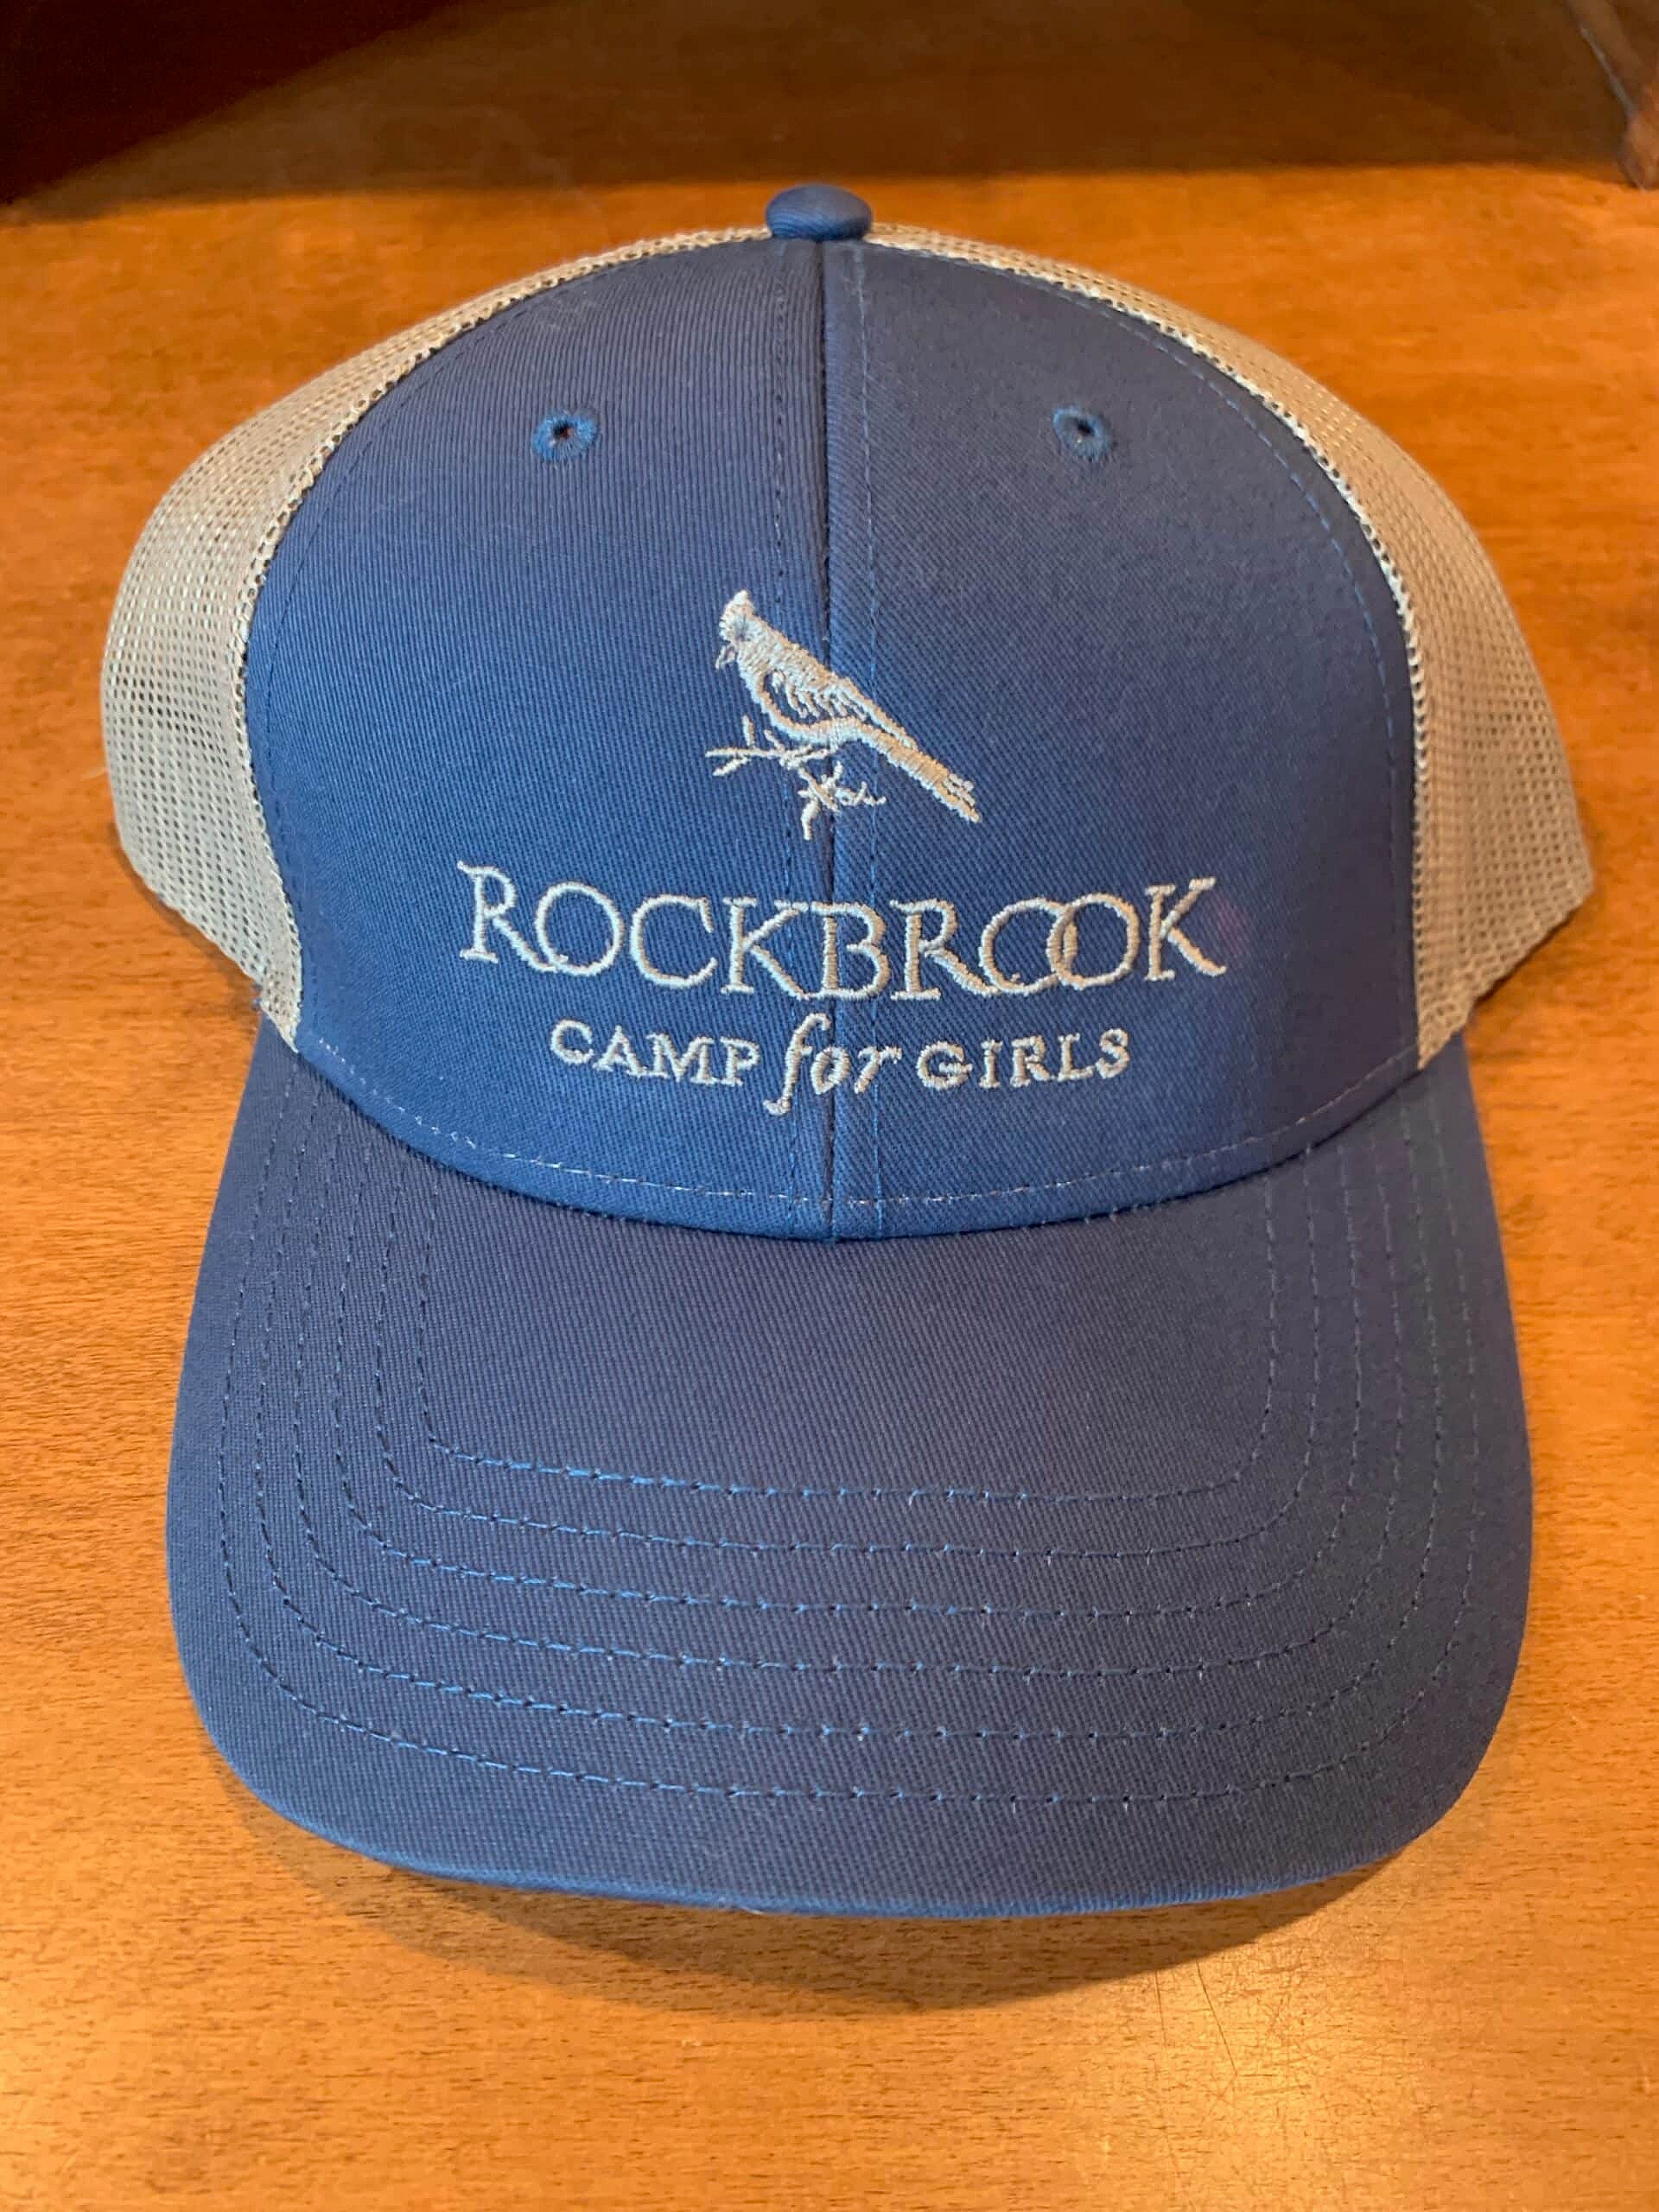 blue trucker hat with white Rockbrook logo